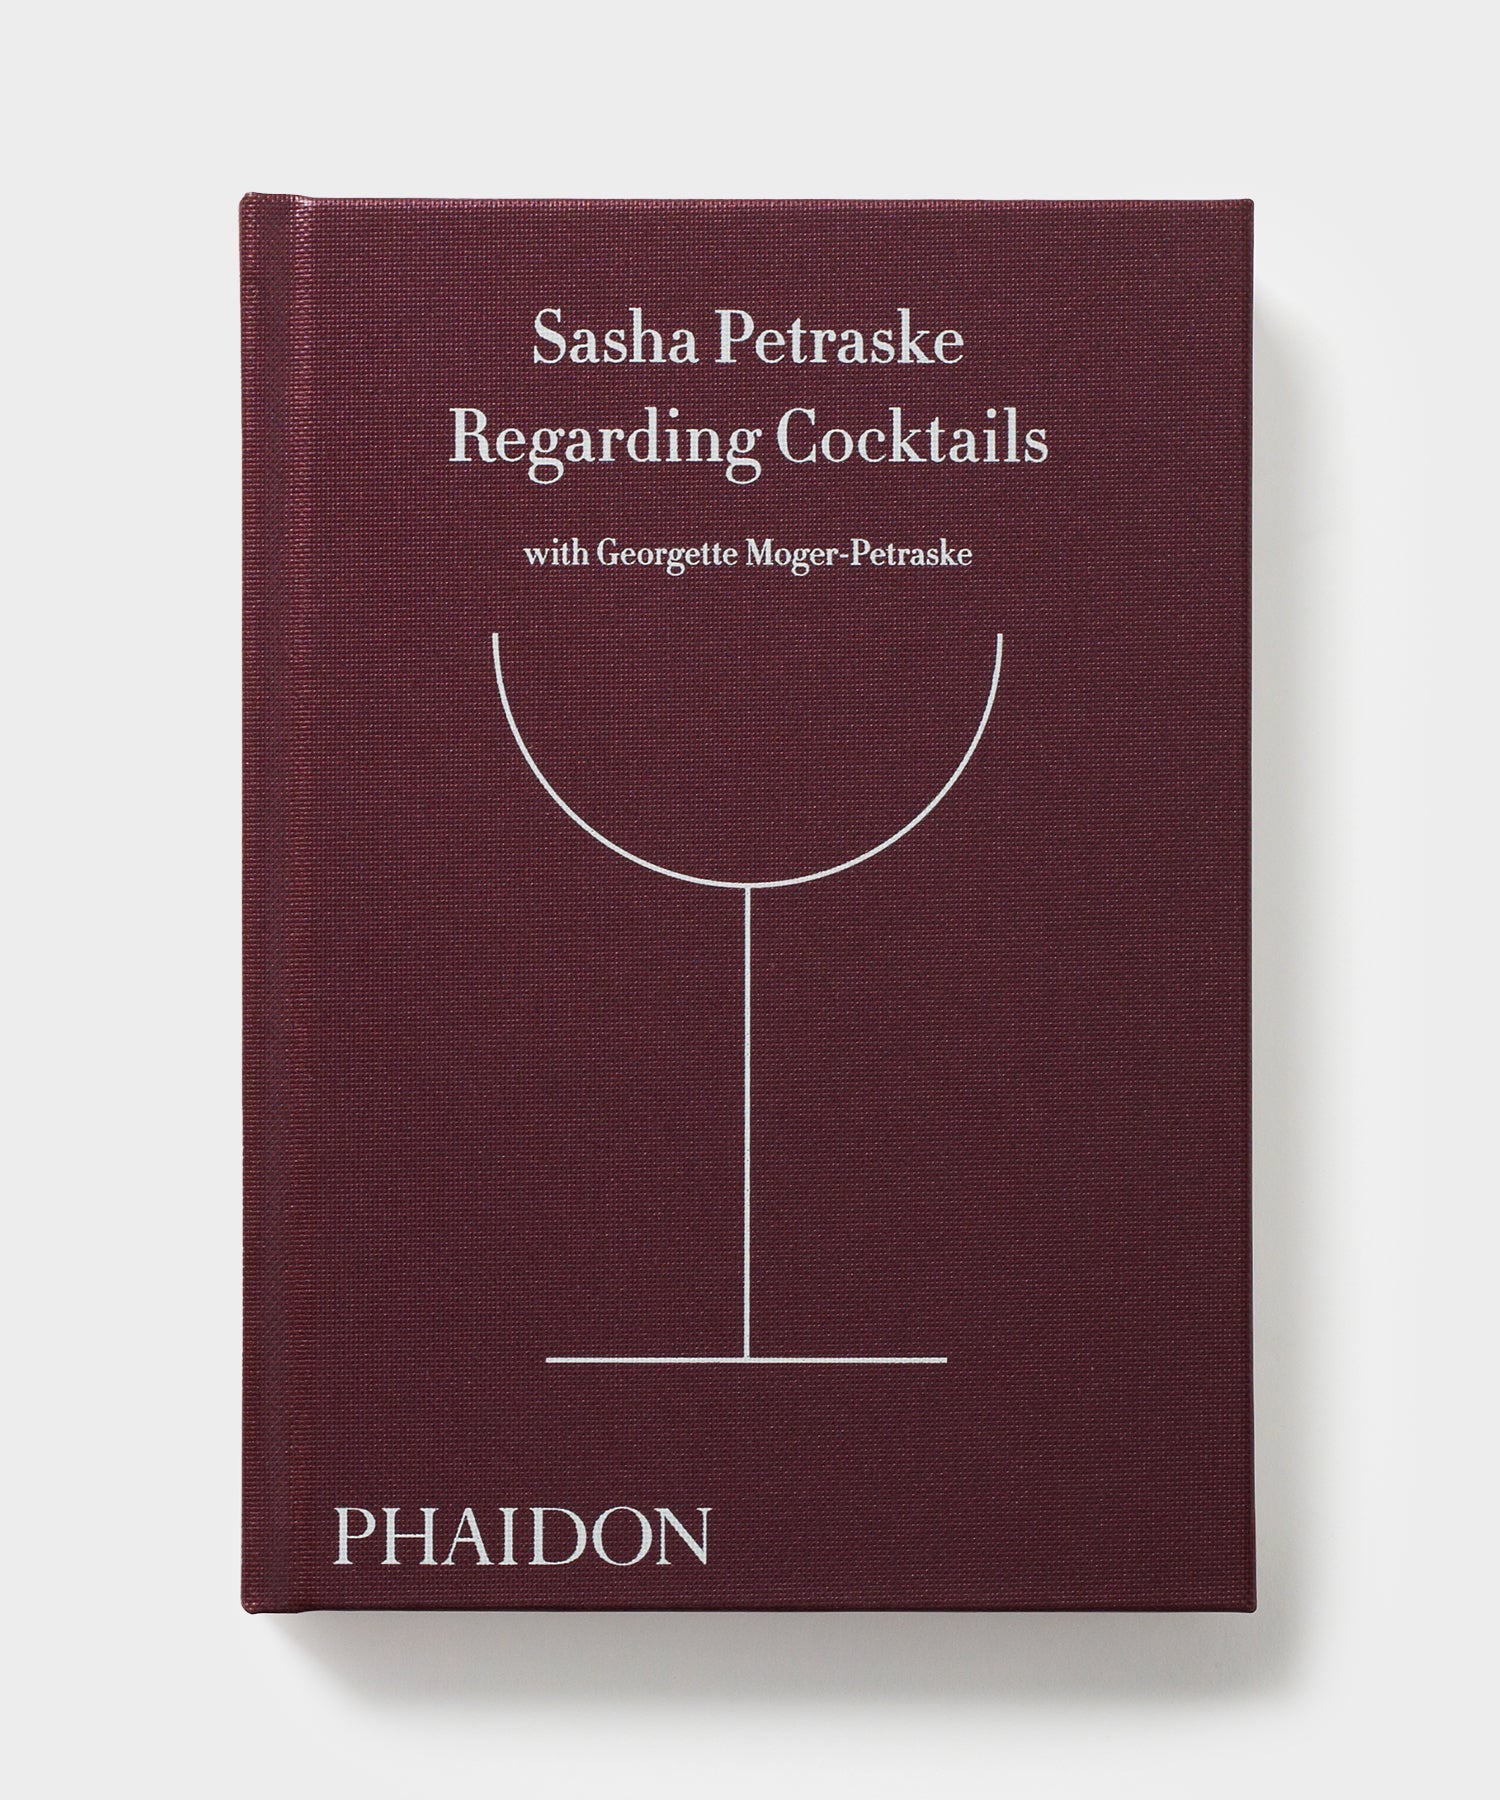 Phaidon " Regarding Cocktails "